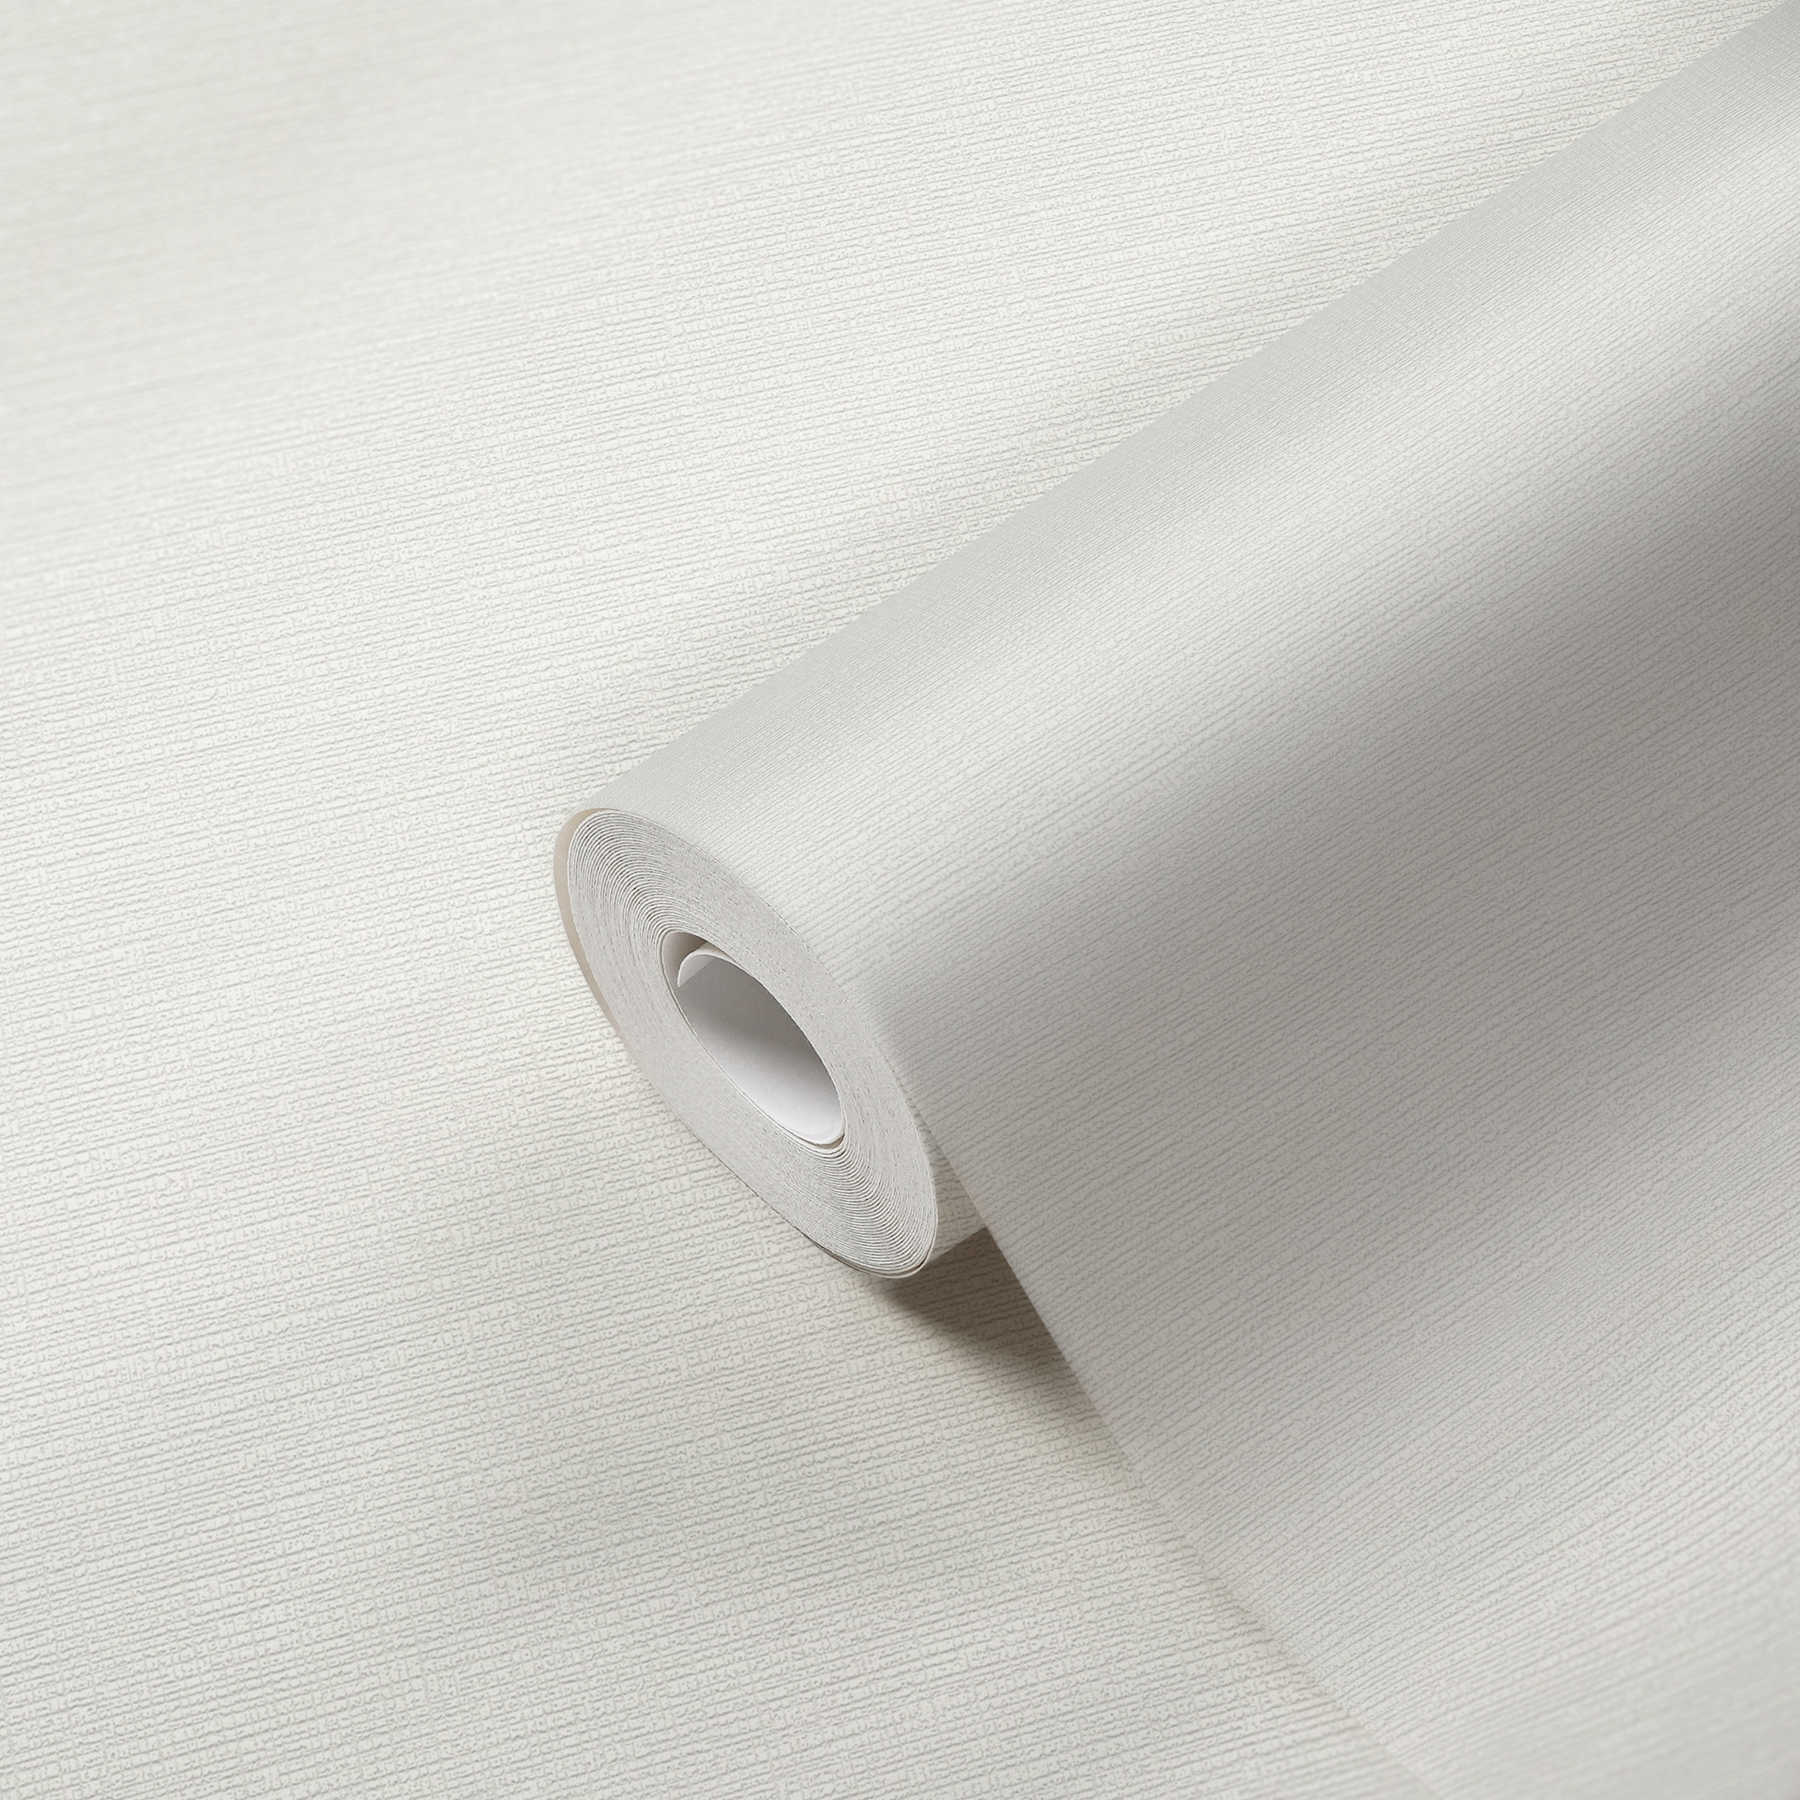             Non-woven wallpaper white with retro structure & textile effect
        